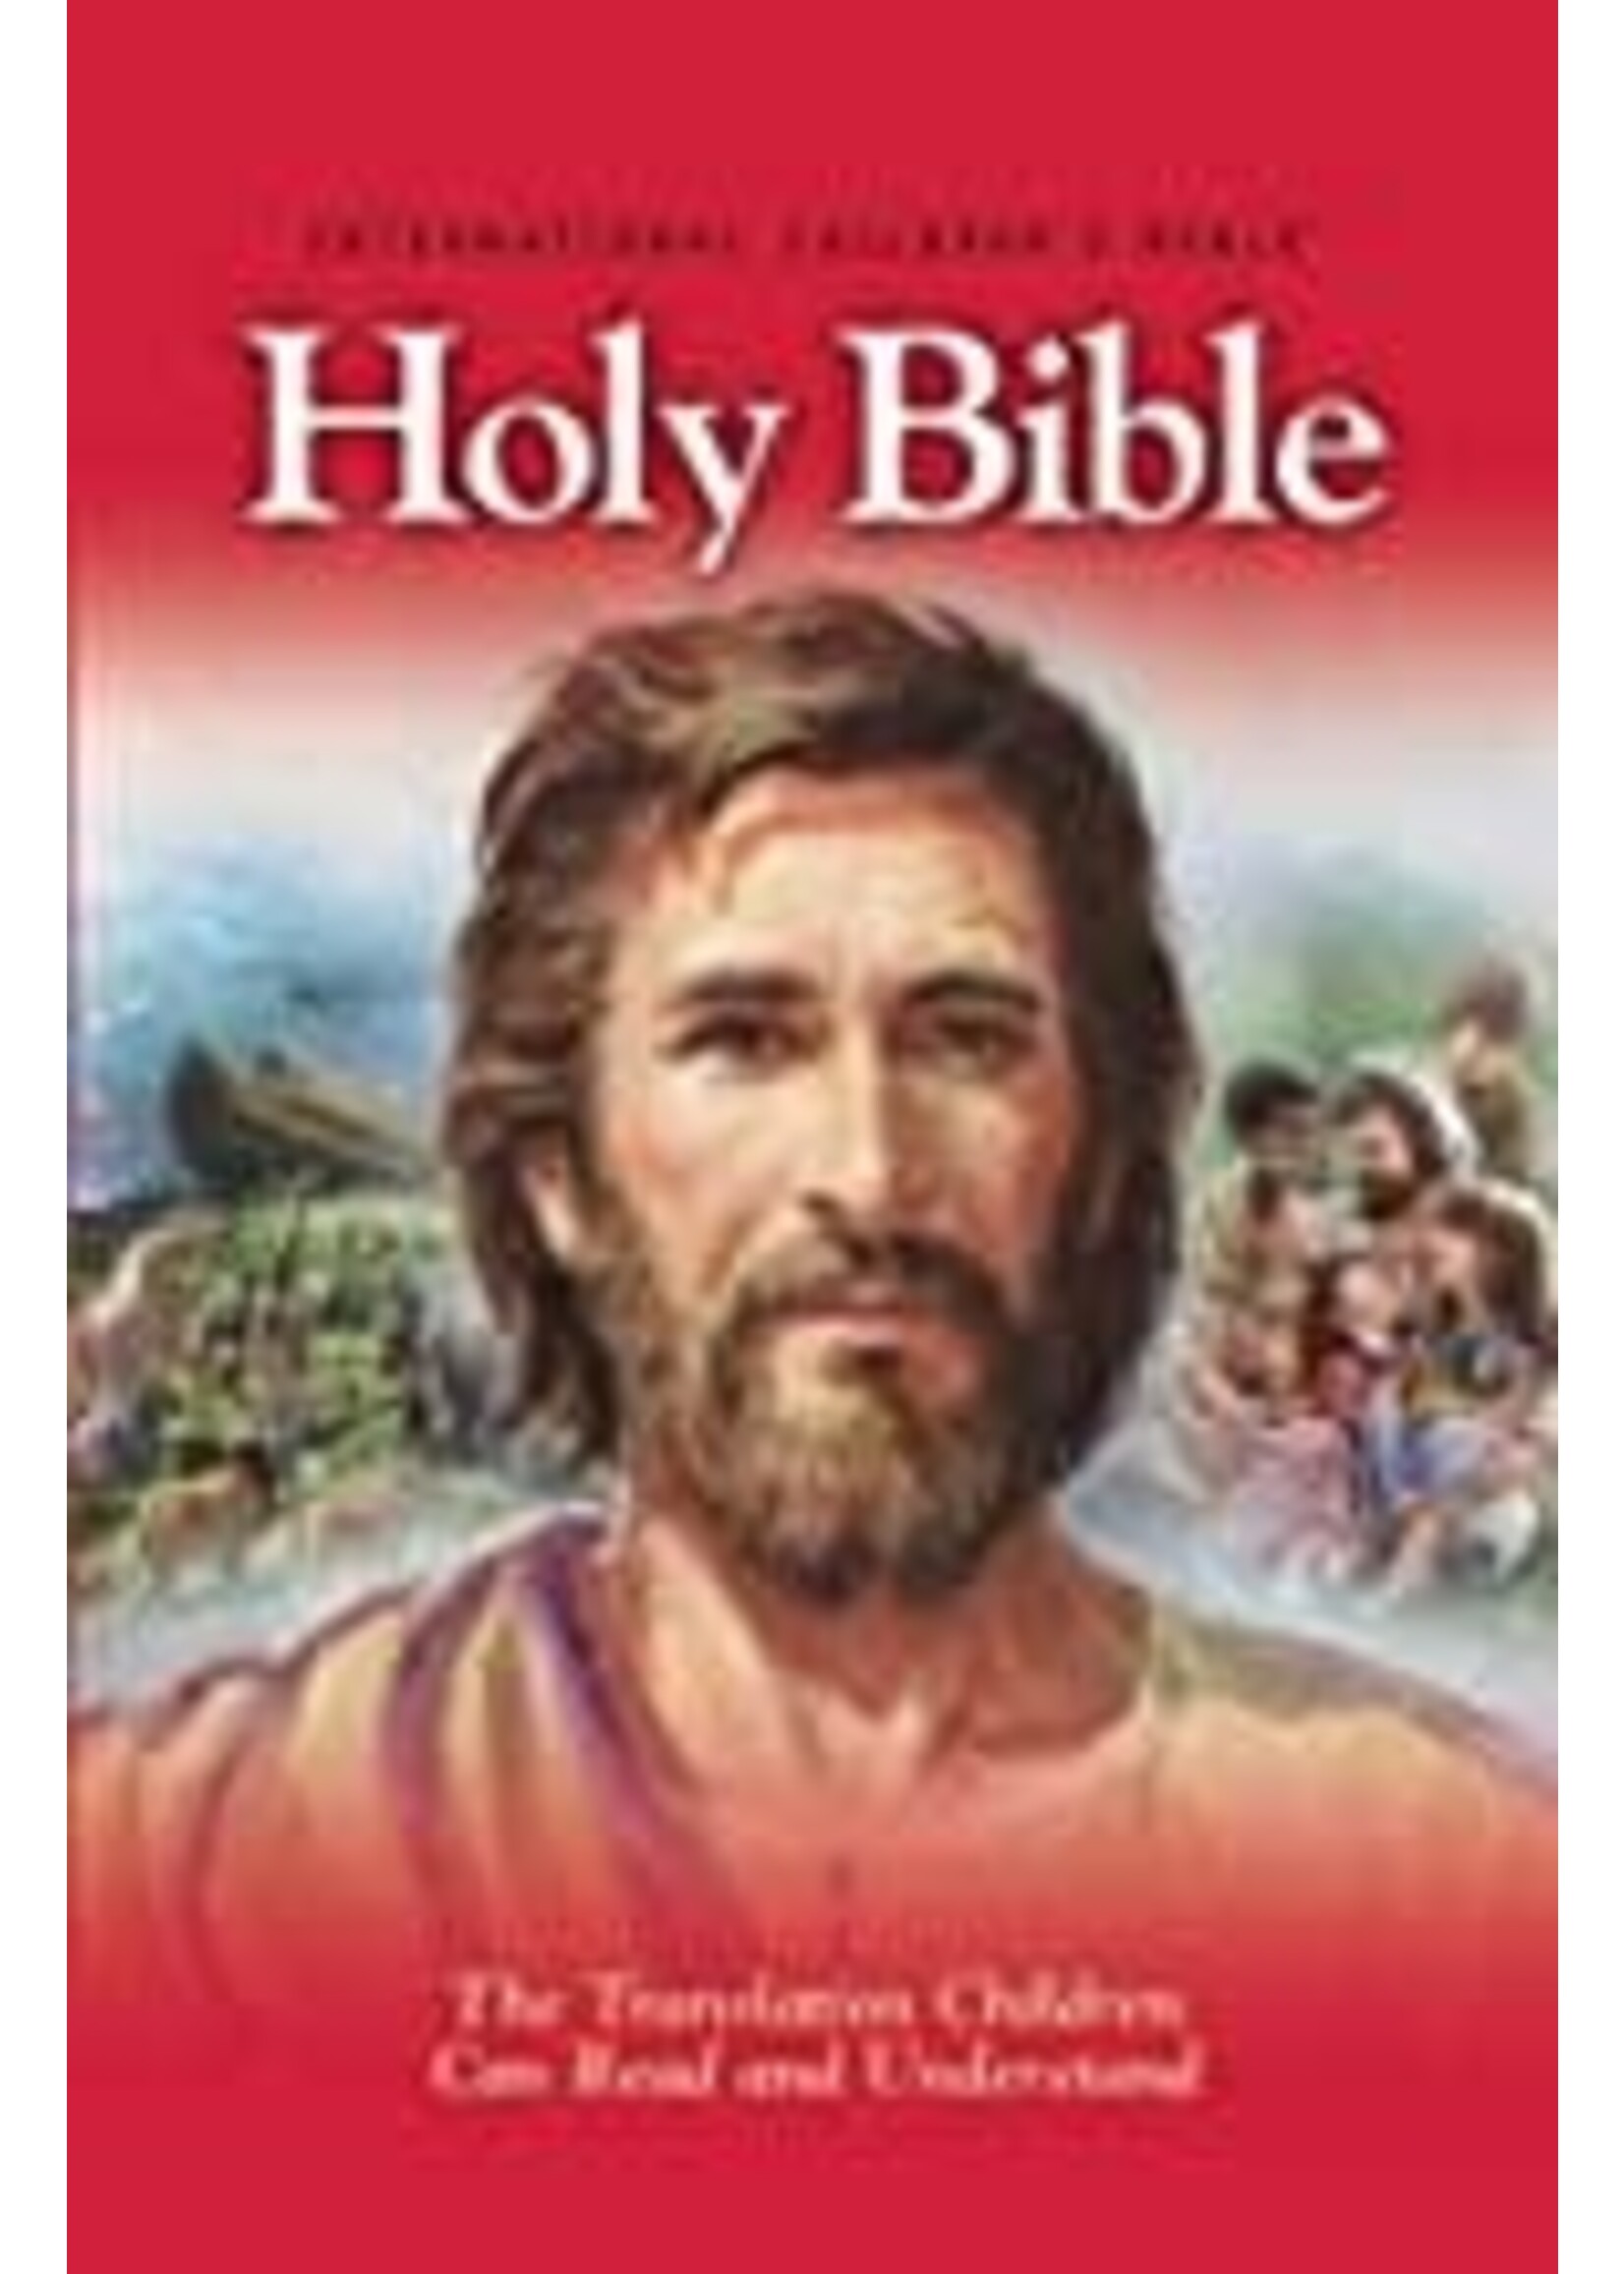 International Children's Bible, Holy Bible